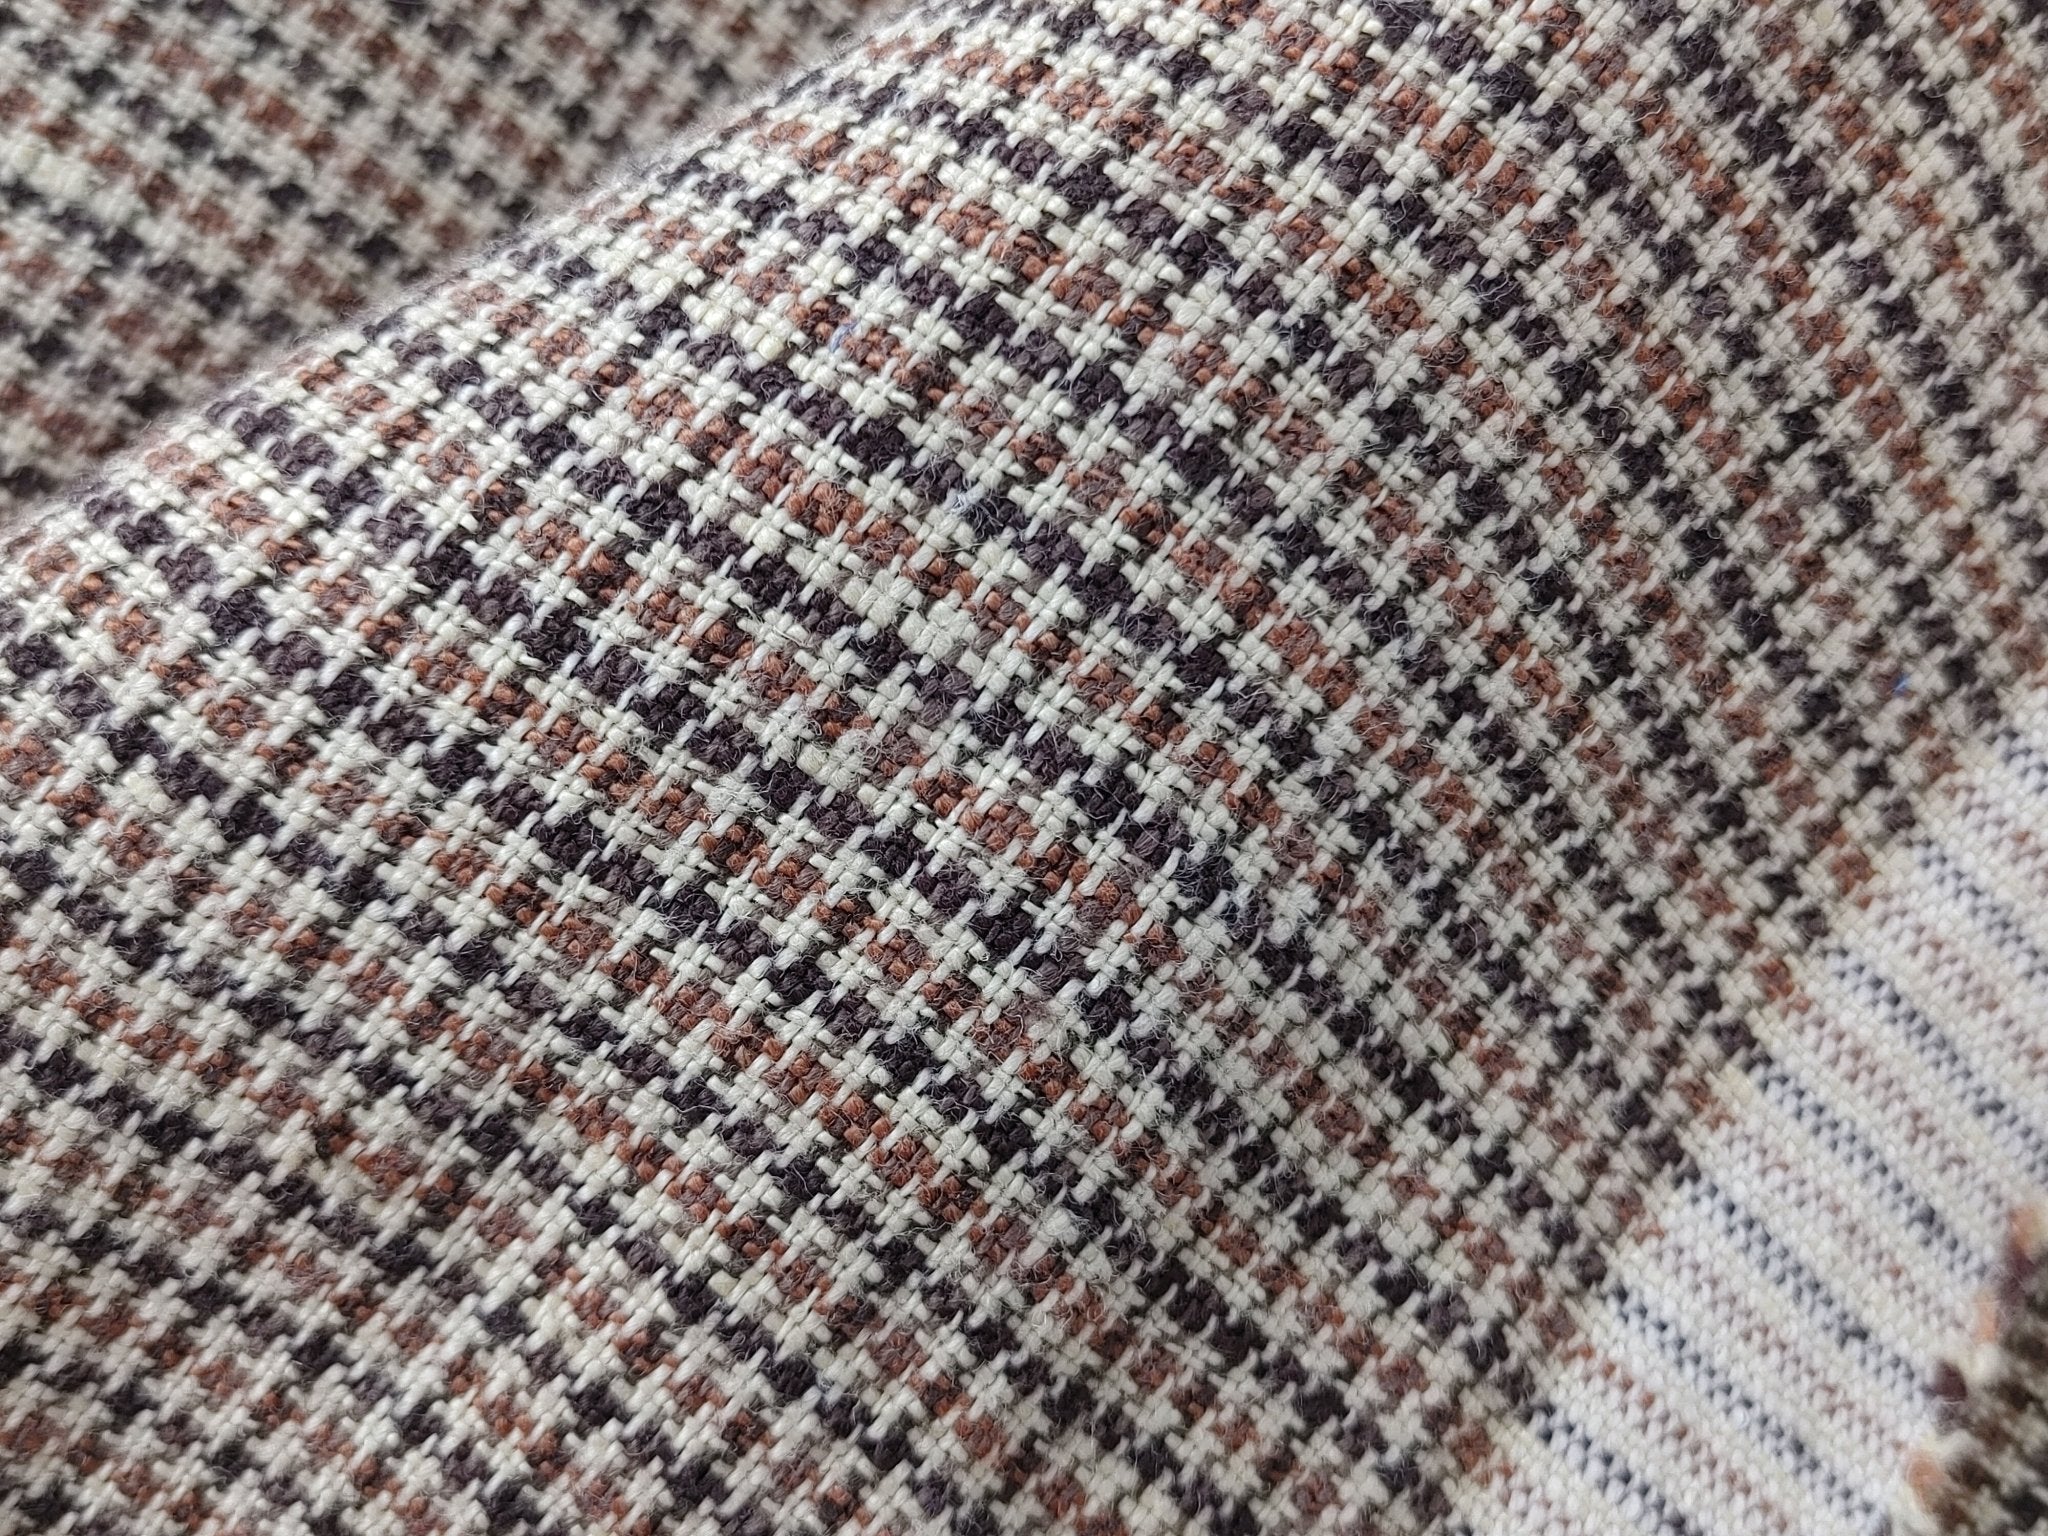 100% Linen Houndstooth StarCheck Fabric: Heavyweight Elegance - The Linen Lab - Brown